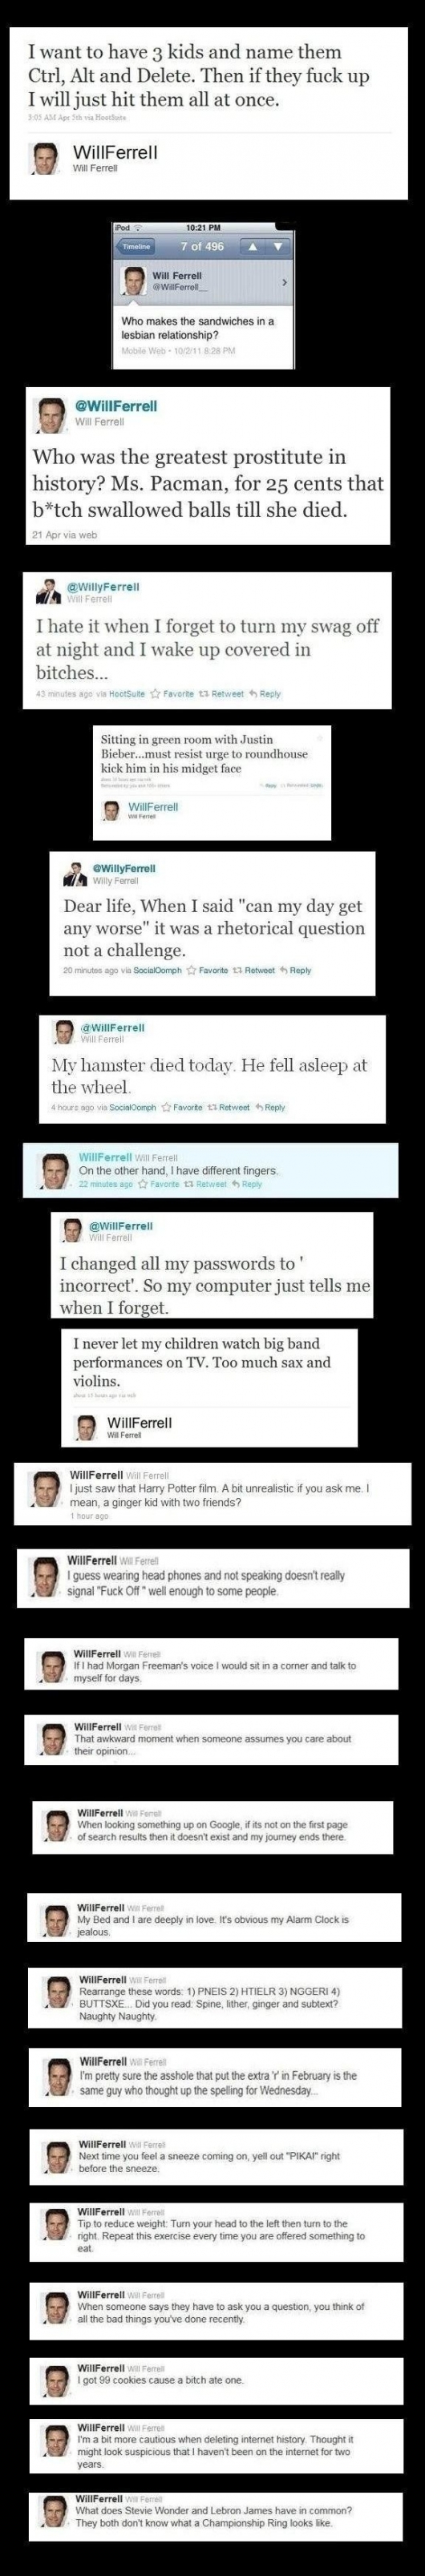 Will Ferrell tweets